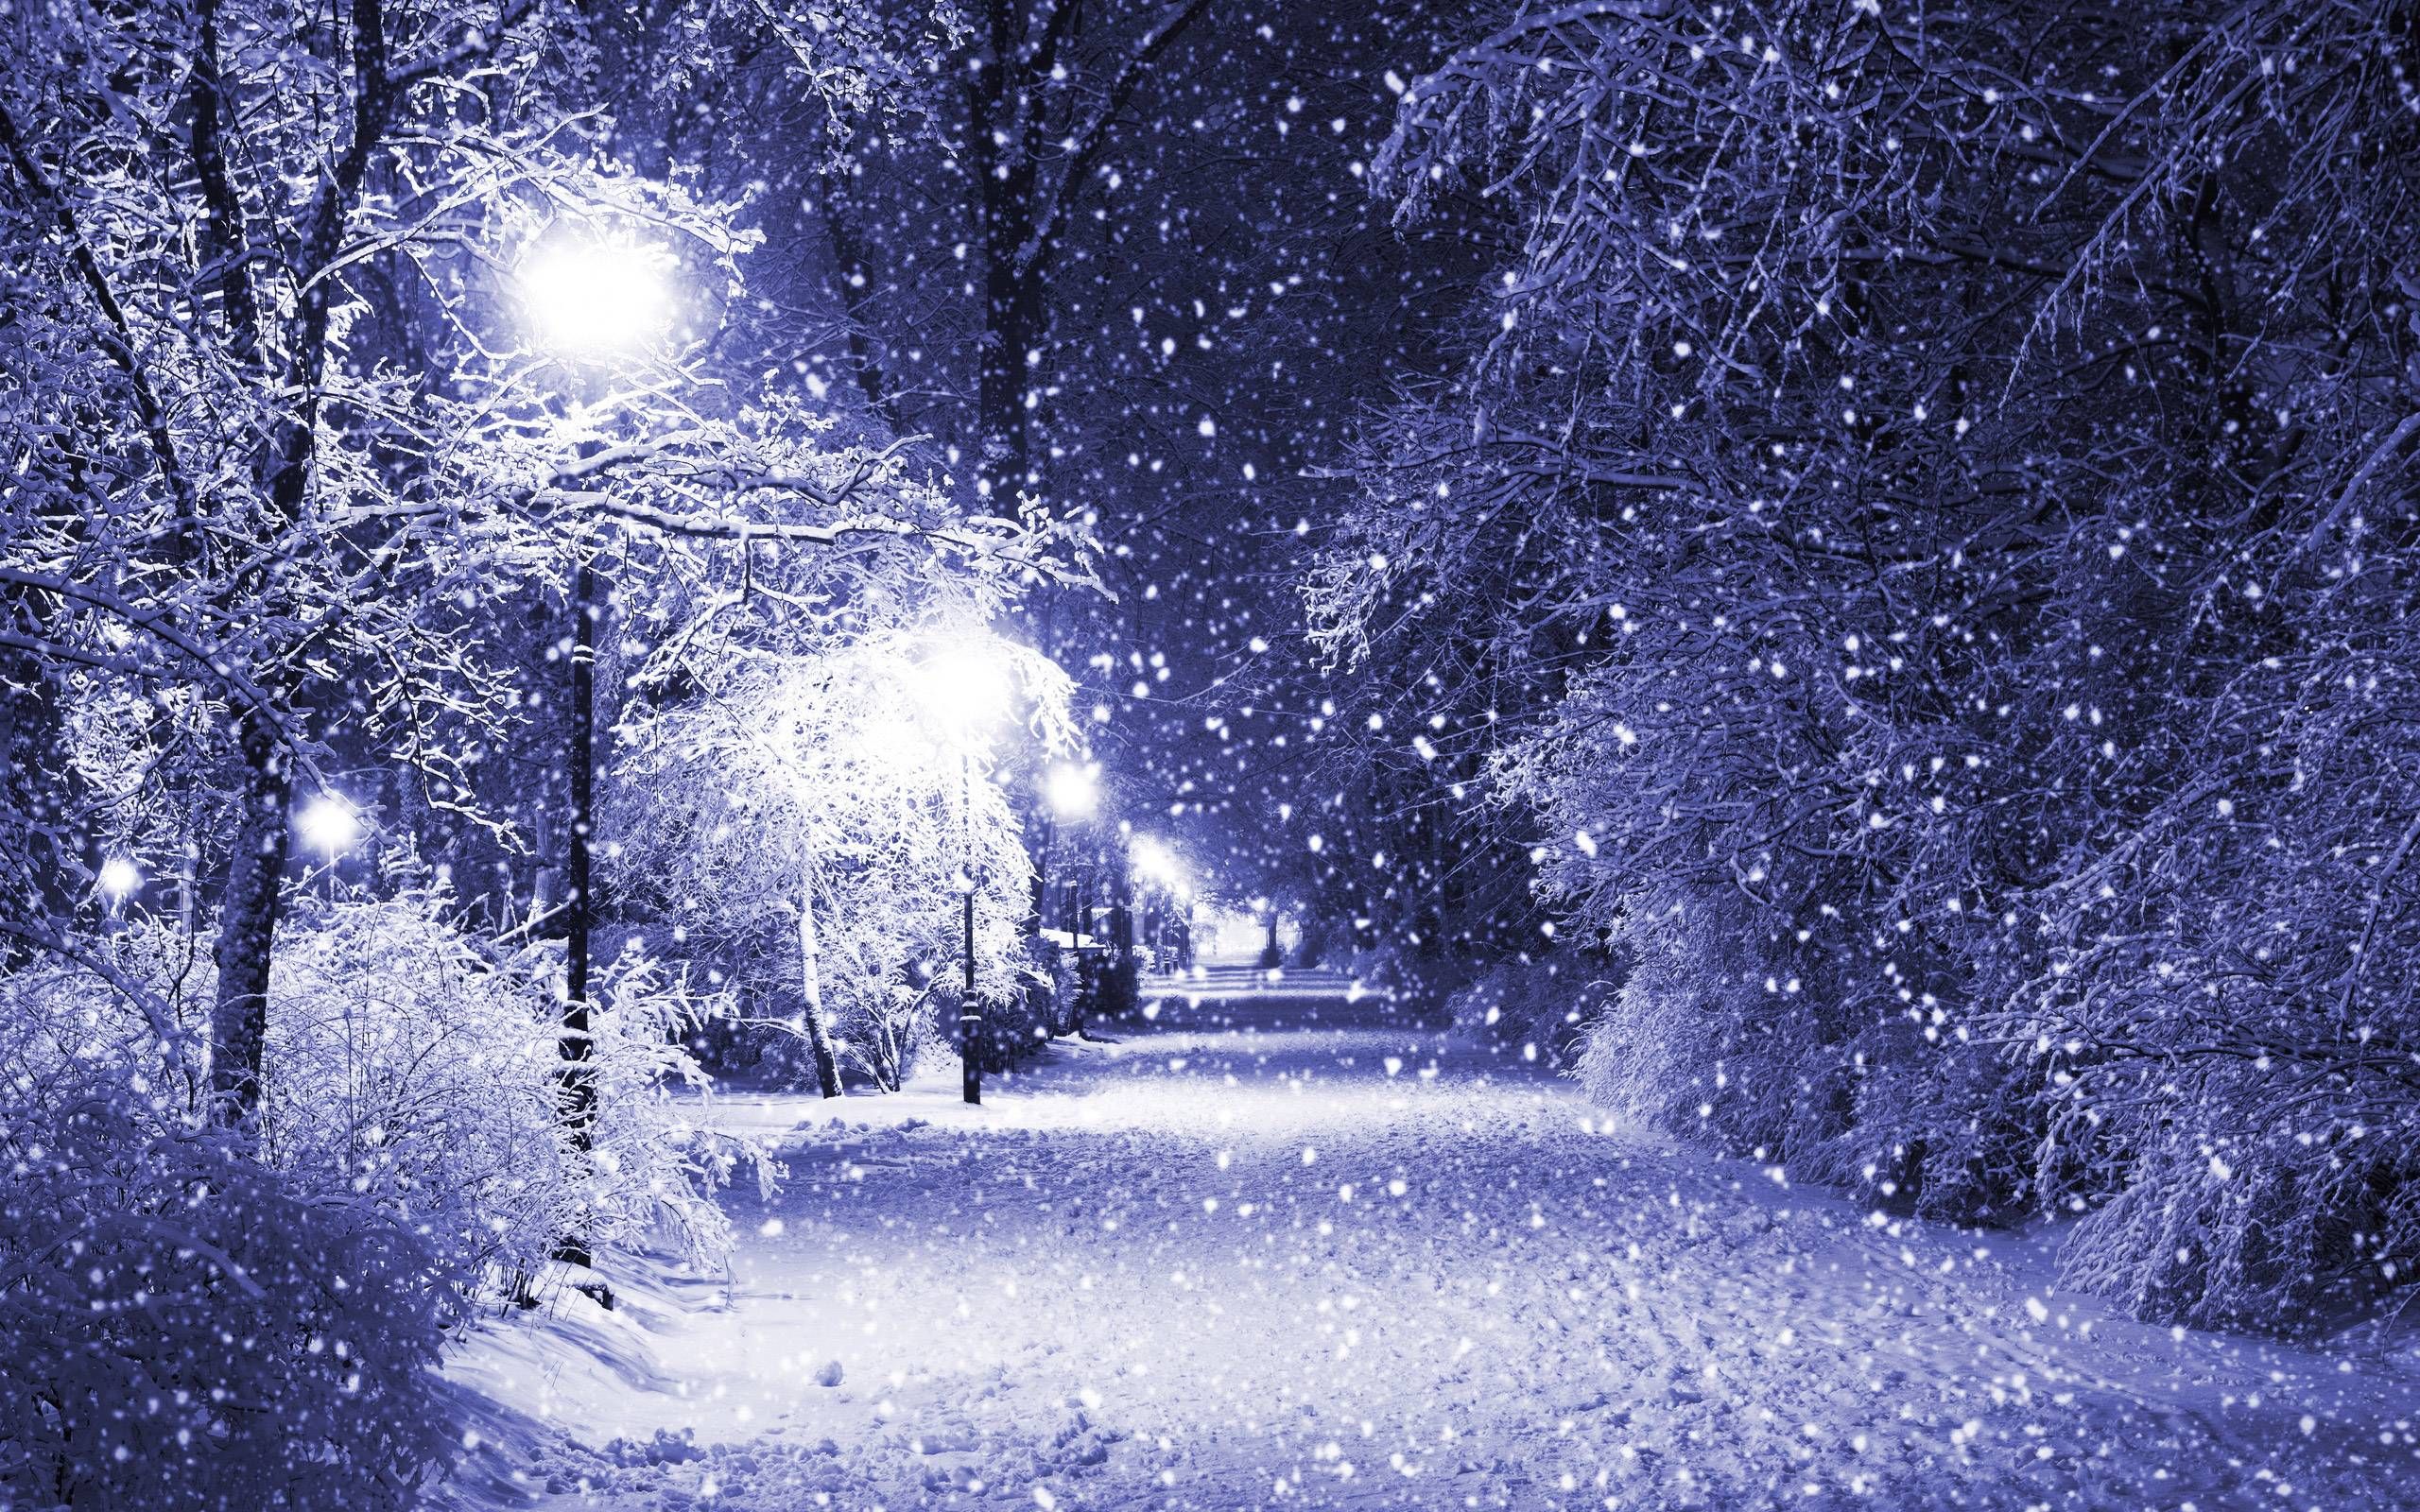 MAGICAL NIGHT PHOTOS. Winter wallpaper, Winter scenery, Free winter wallpaper